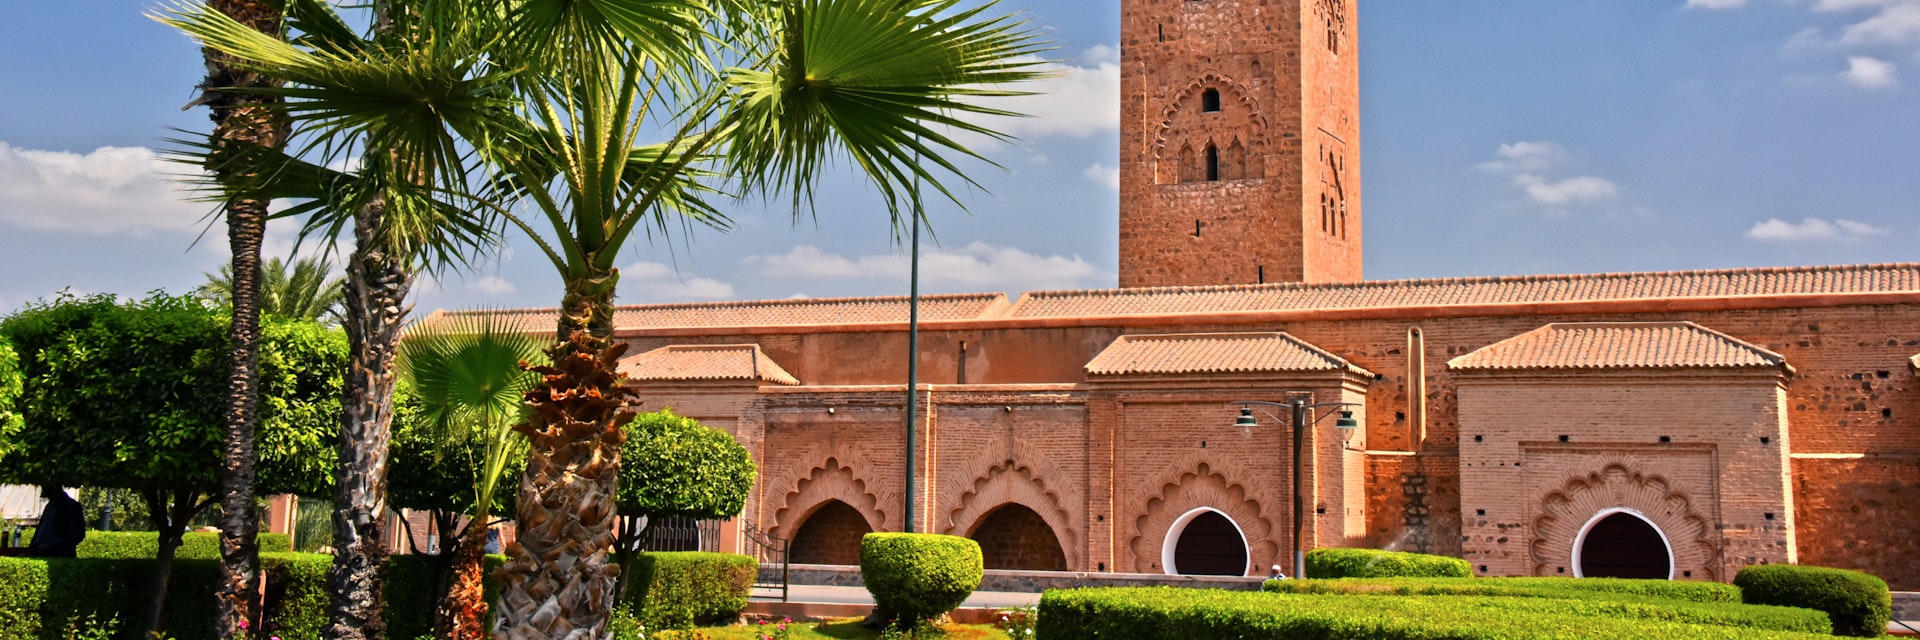 Koutoubia Mosque in the southwest medina quarter of Marrakesh, Morocco; Shutterstock ID 533973463